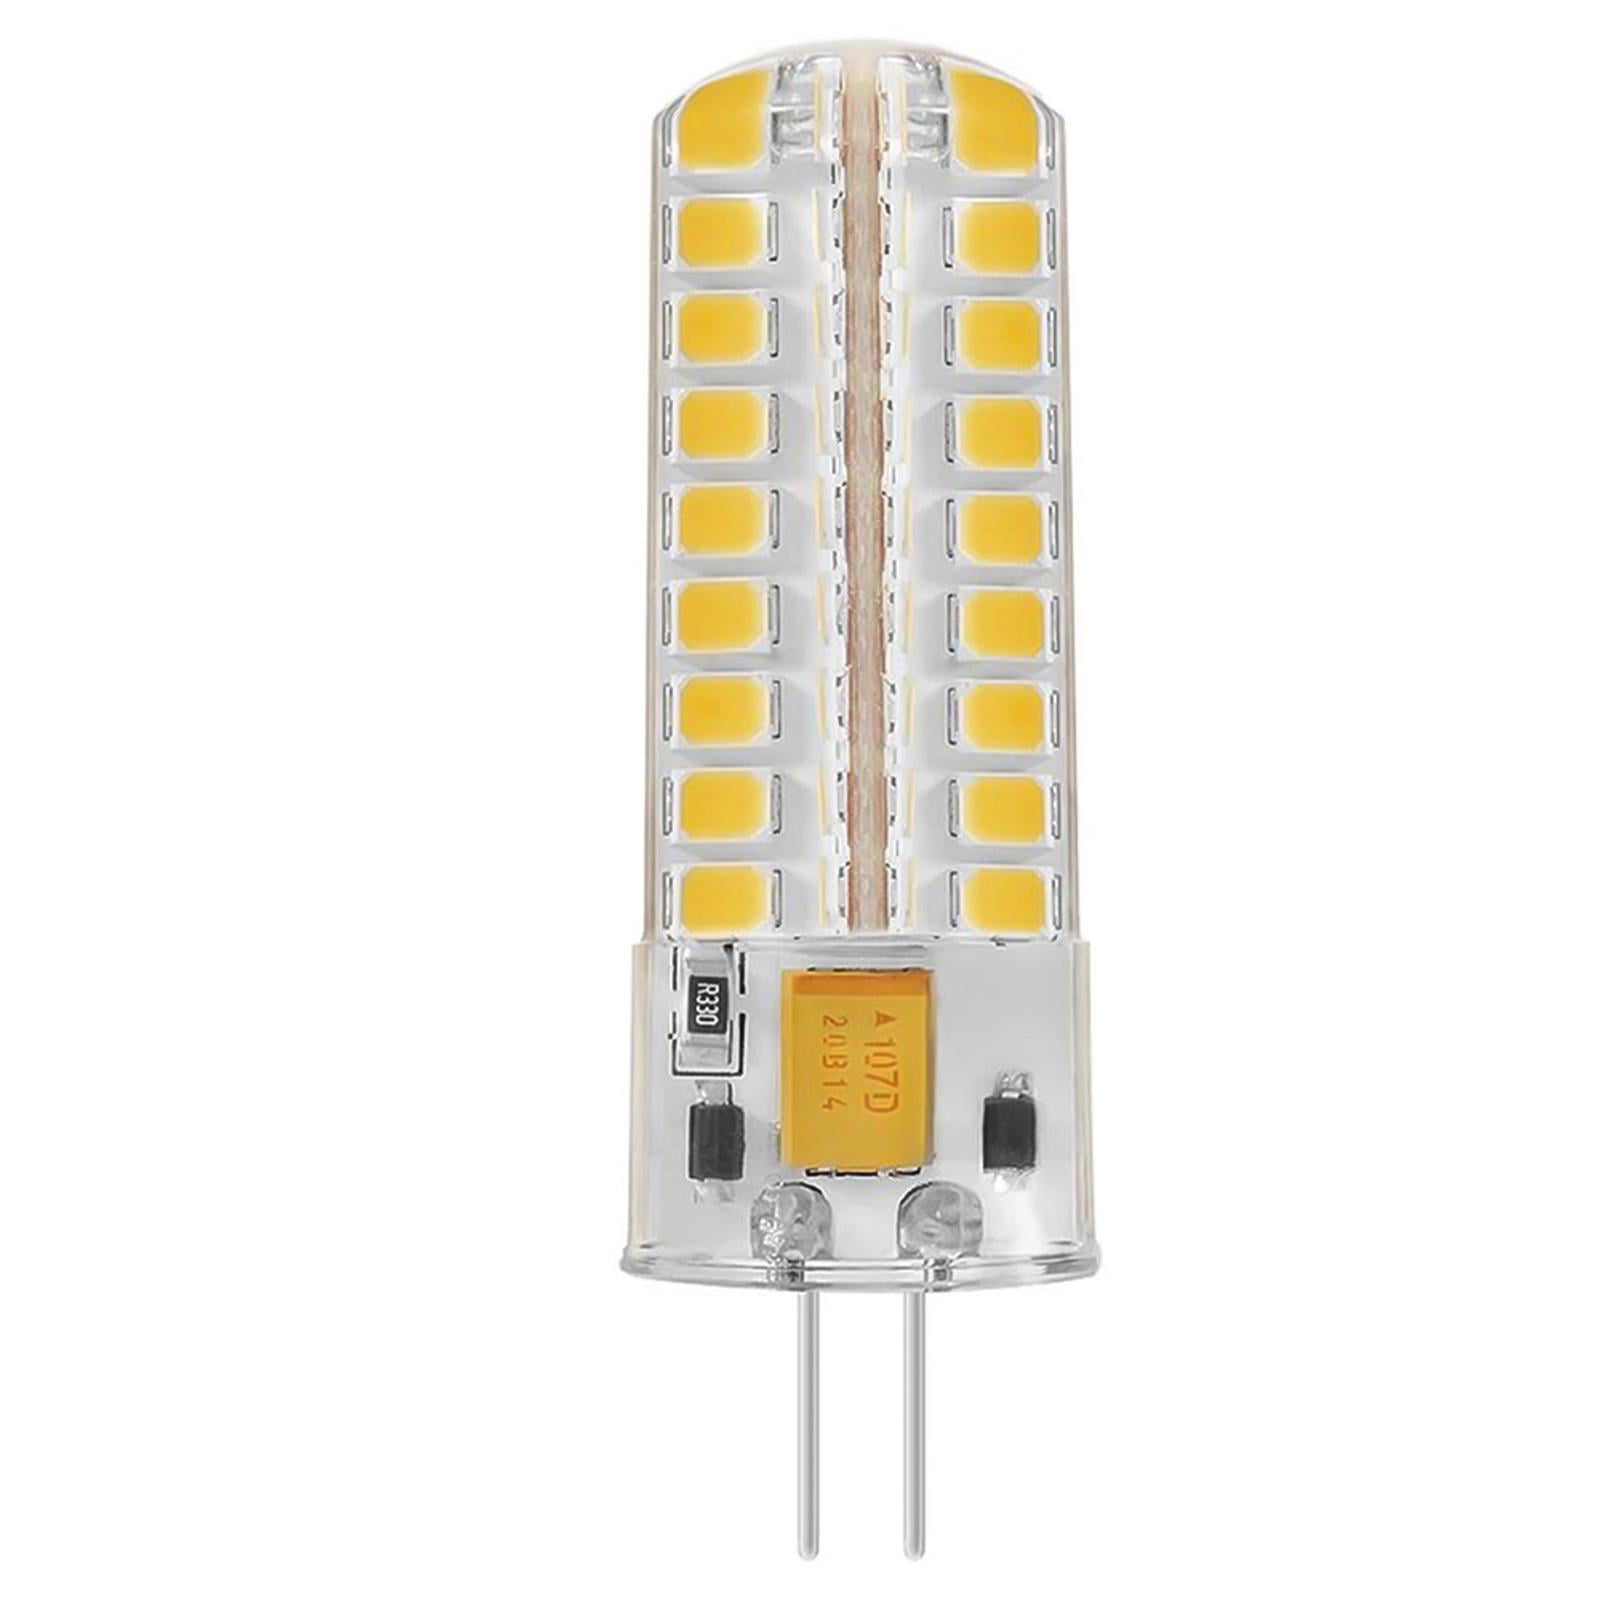 GU10 G4 LED Halogen 4W Bulbs Spotlight Warm White Energy Saving FREE DELIVERY 